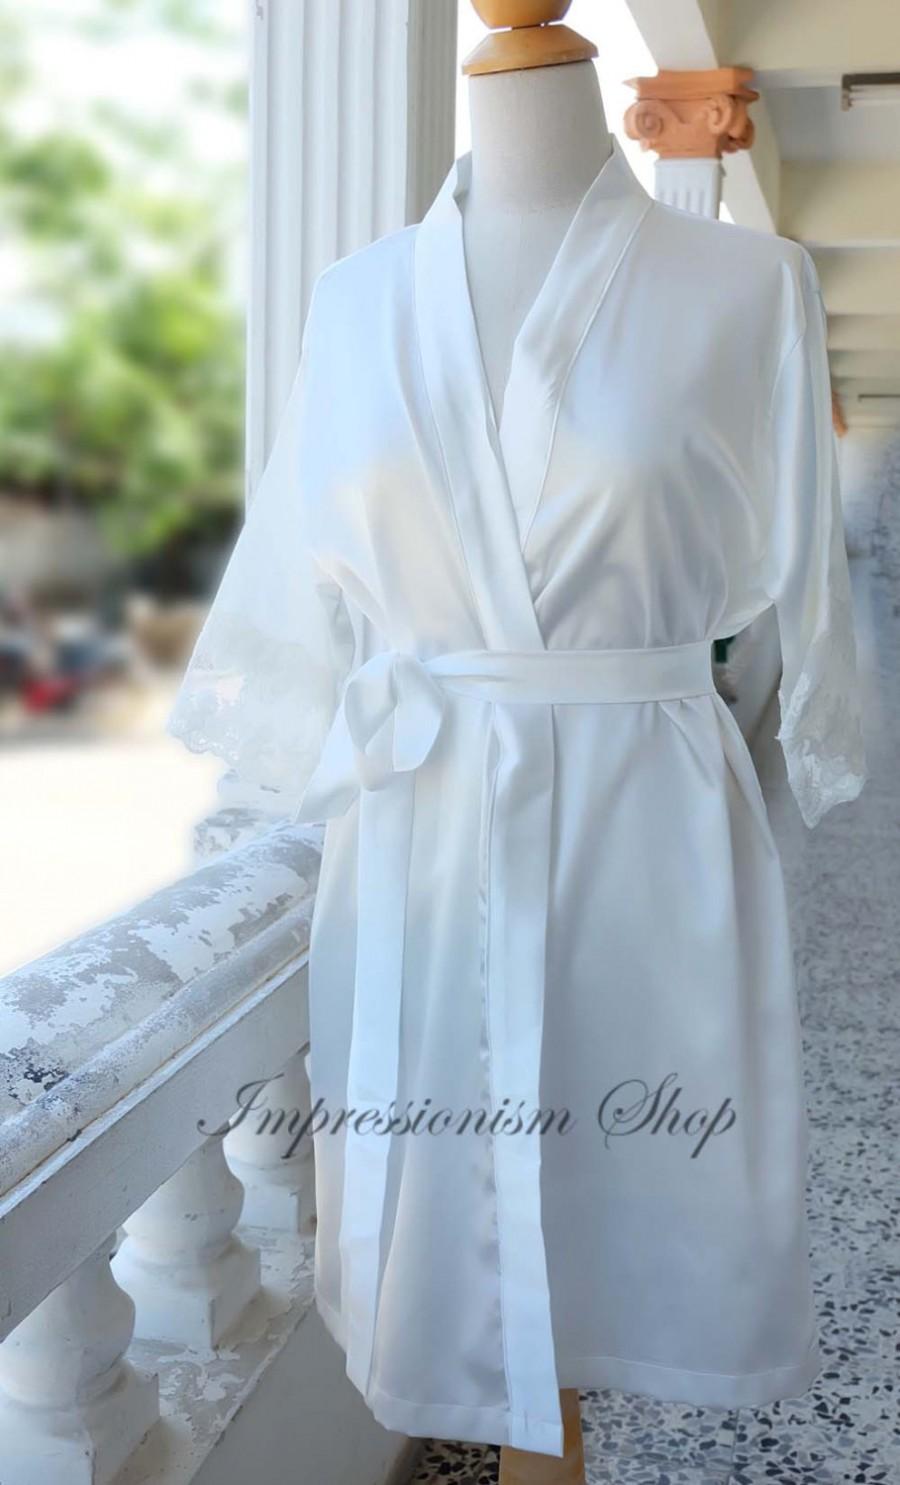 Wedding - White Ivory Satin Lace Robe for Bride, Lingerie, Getting Ready, Bridal Gift, Bachelorette party Gift, Honeymoon, Lace Kimono, Wedding Gift